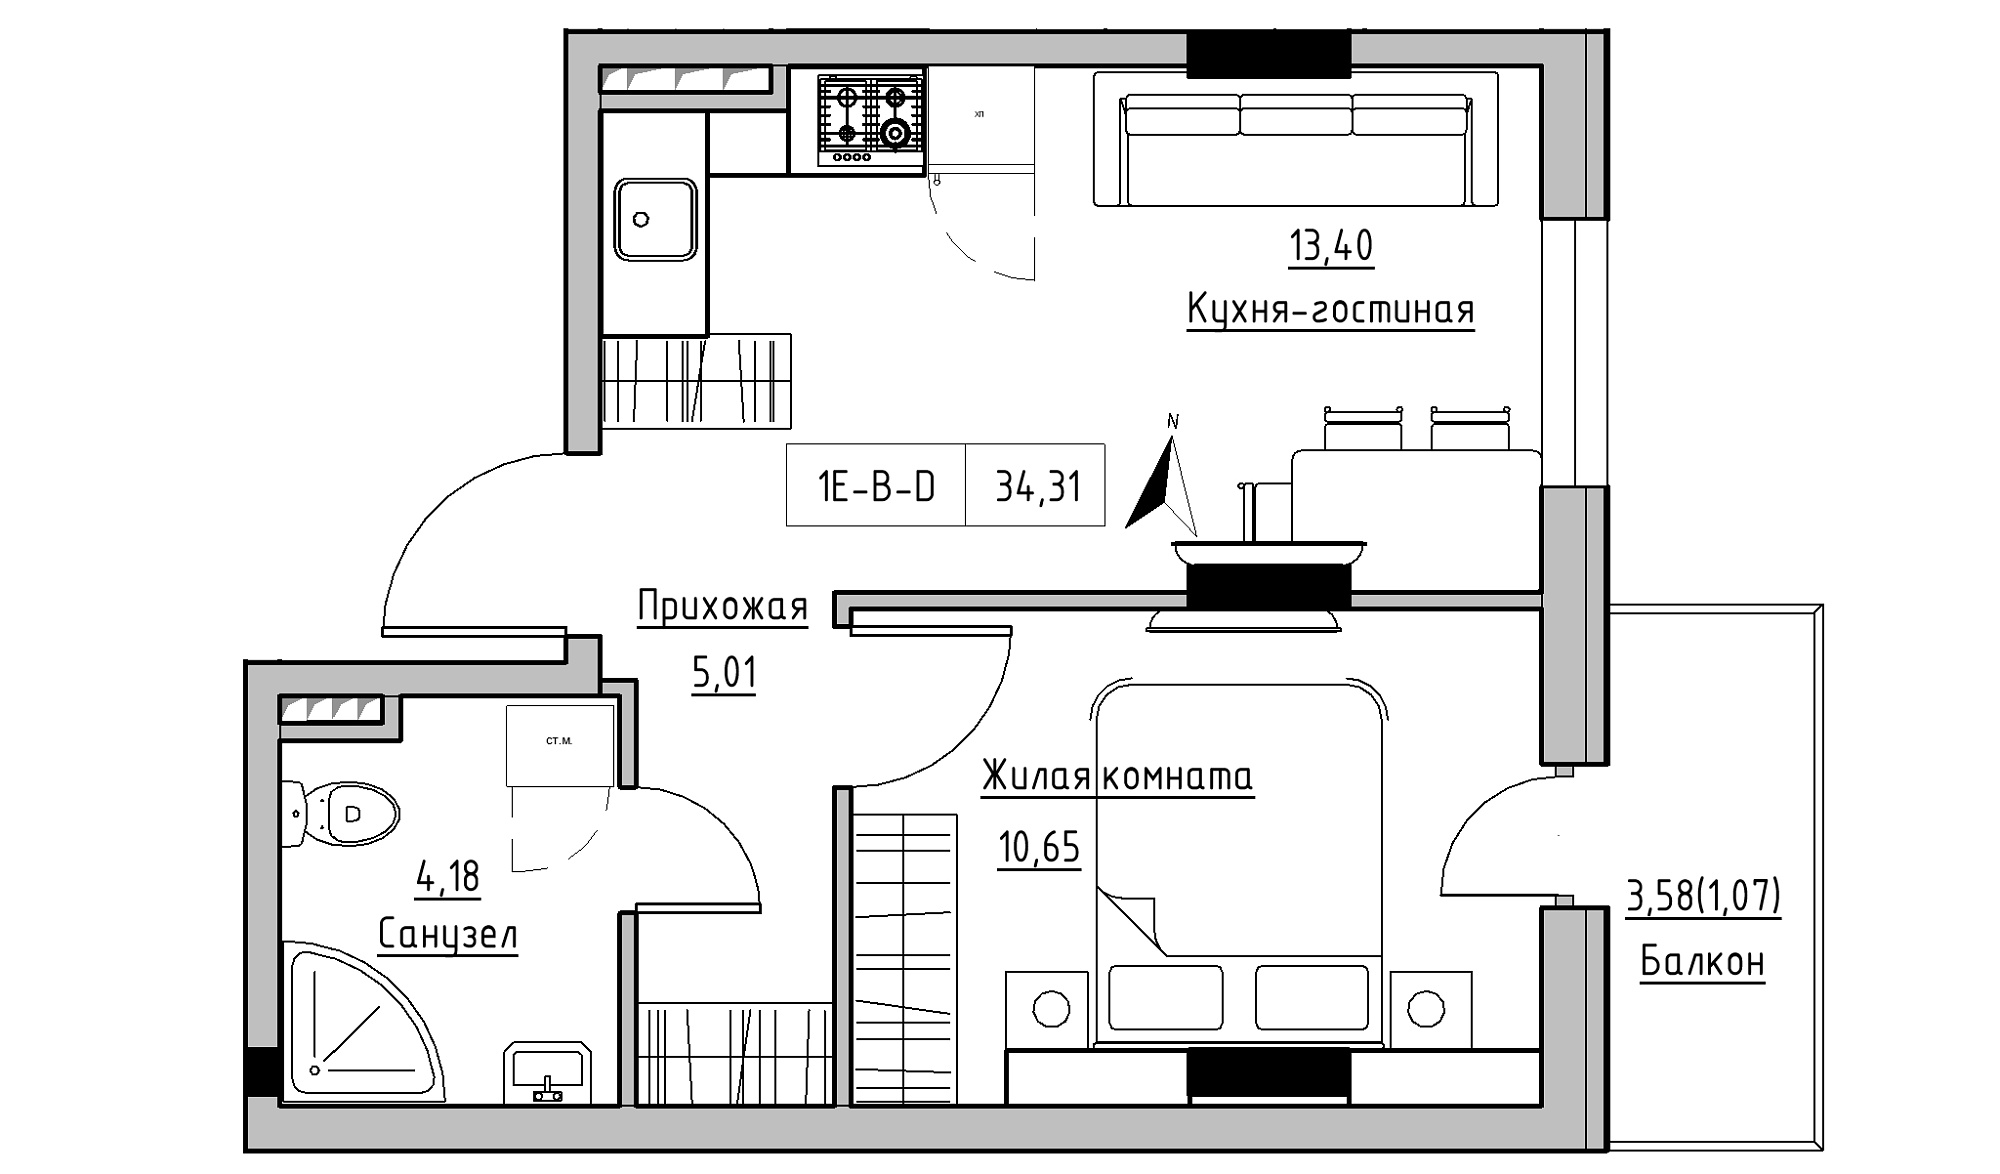 Planning 1-rm flats area 34.31m2, KS-025-03/0002.